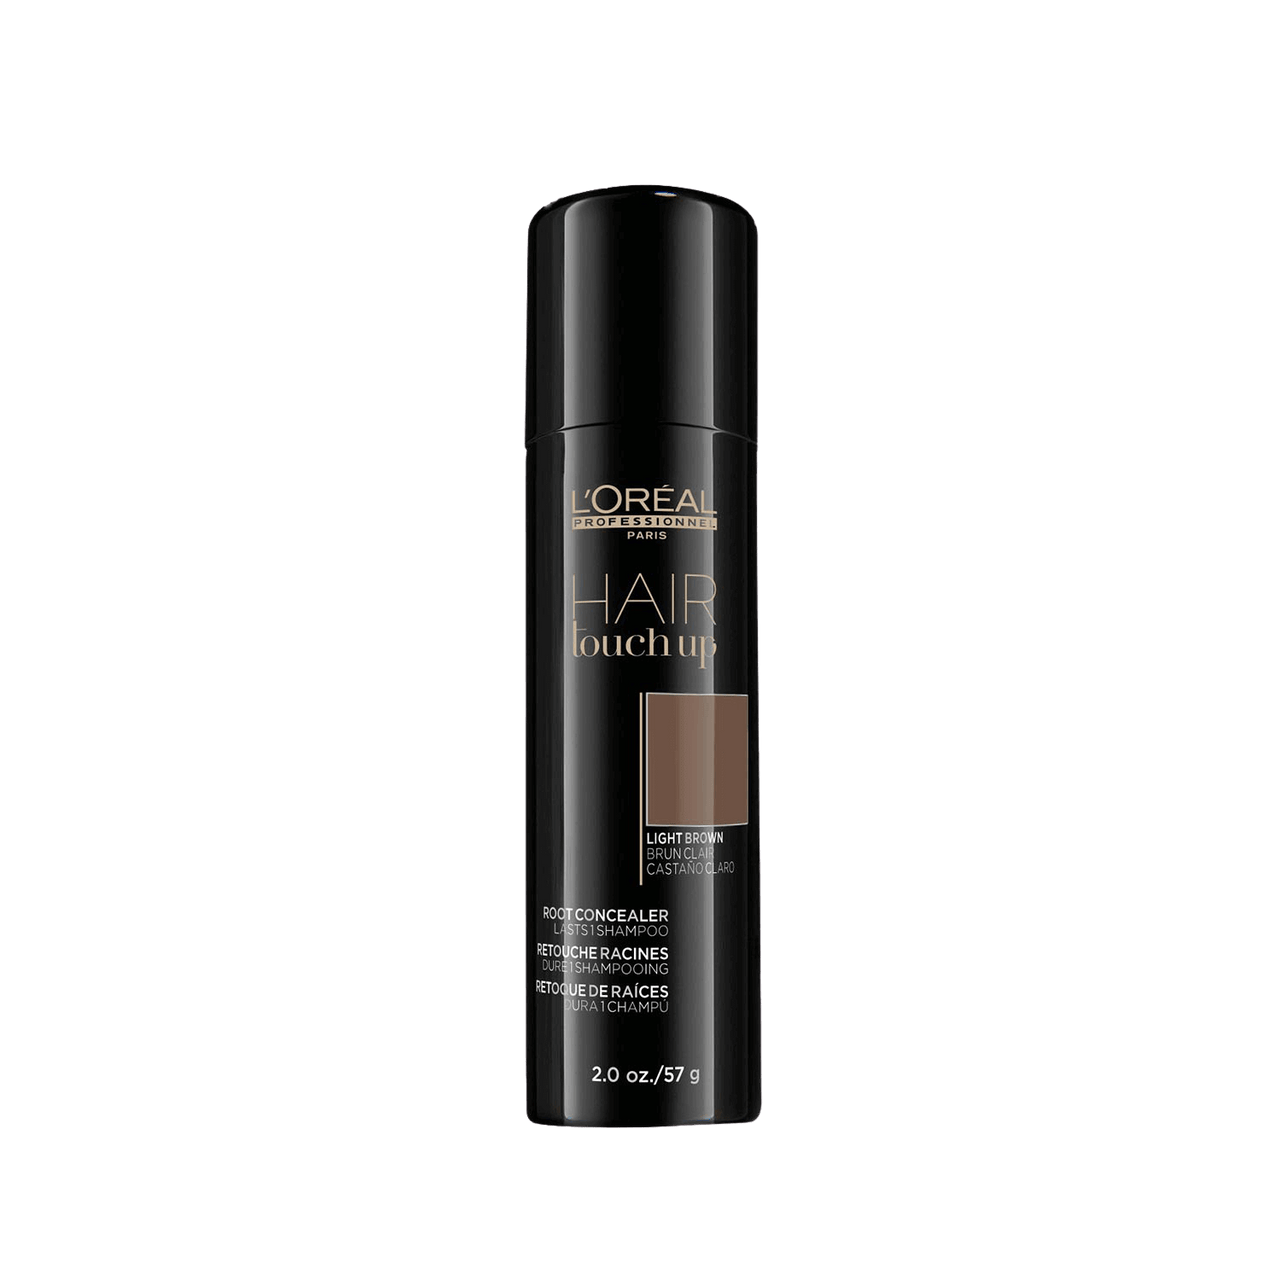 L'Oréal Professionnel Hair Touchup Light Brown 57g Spray